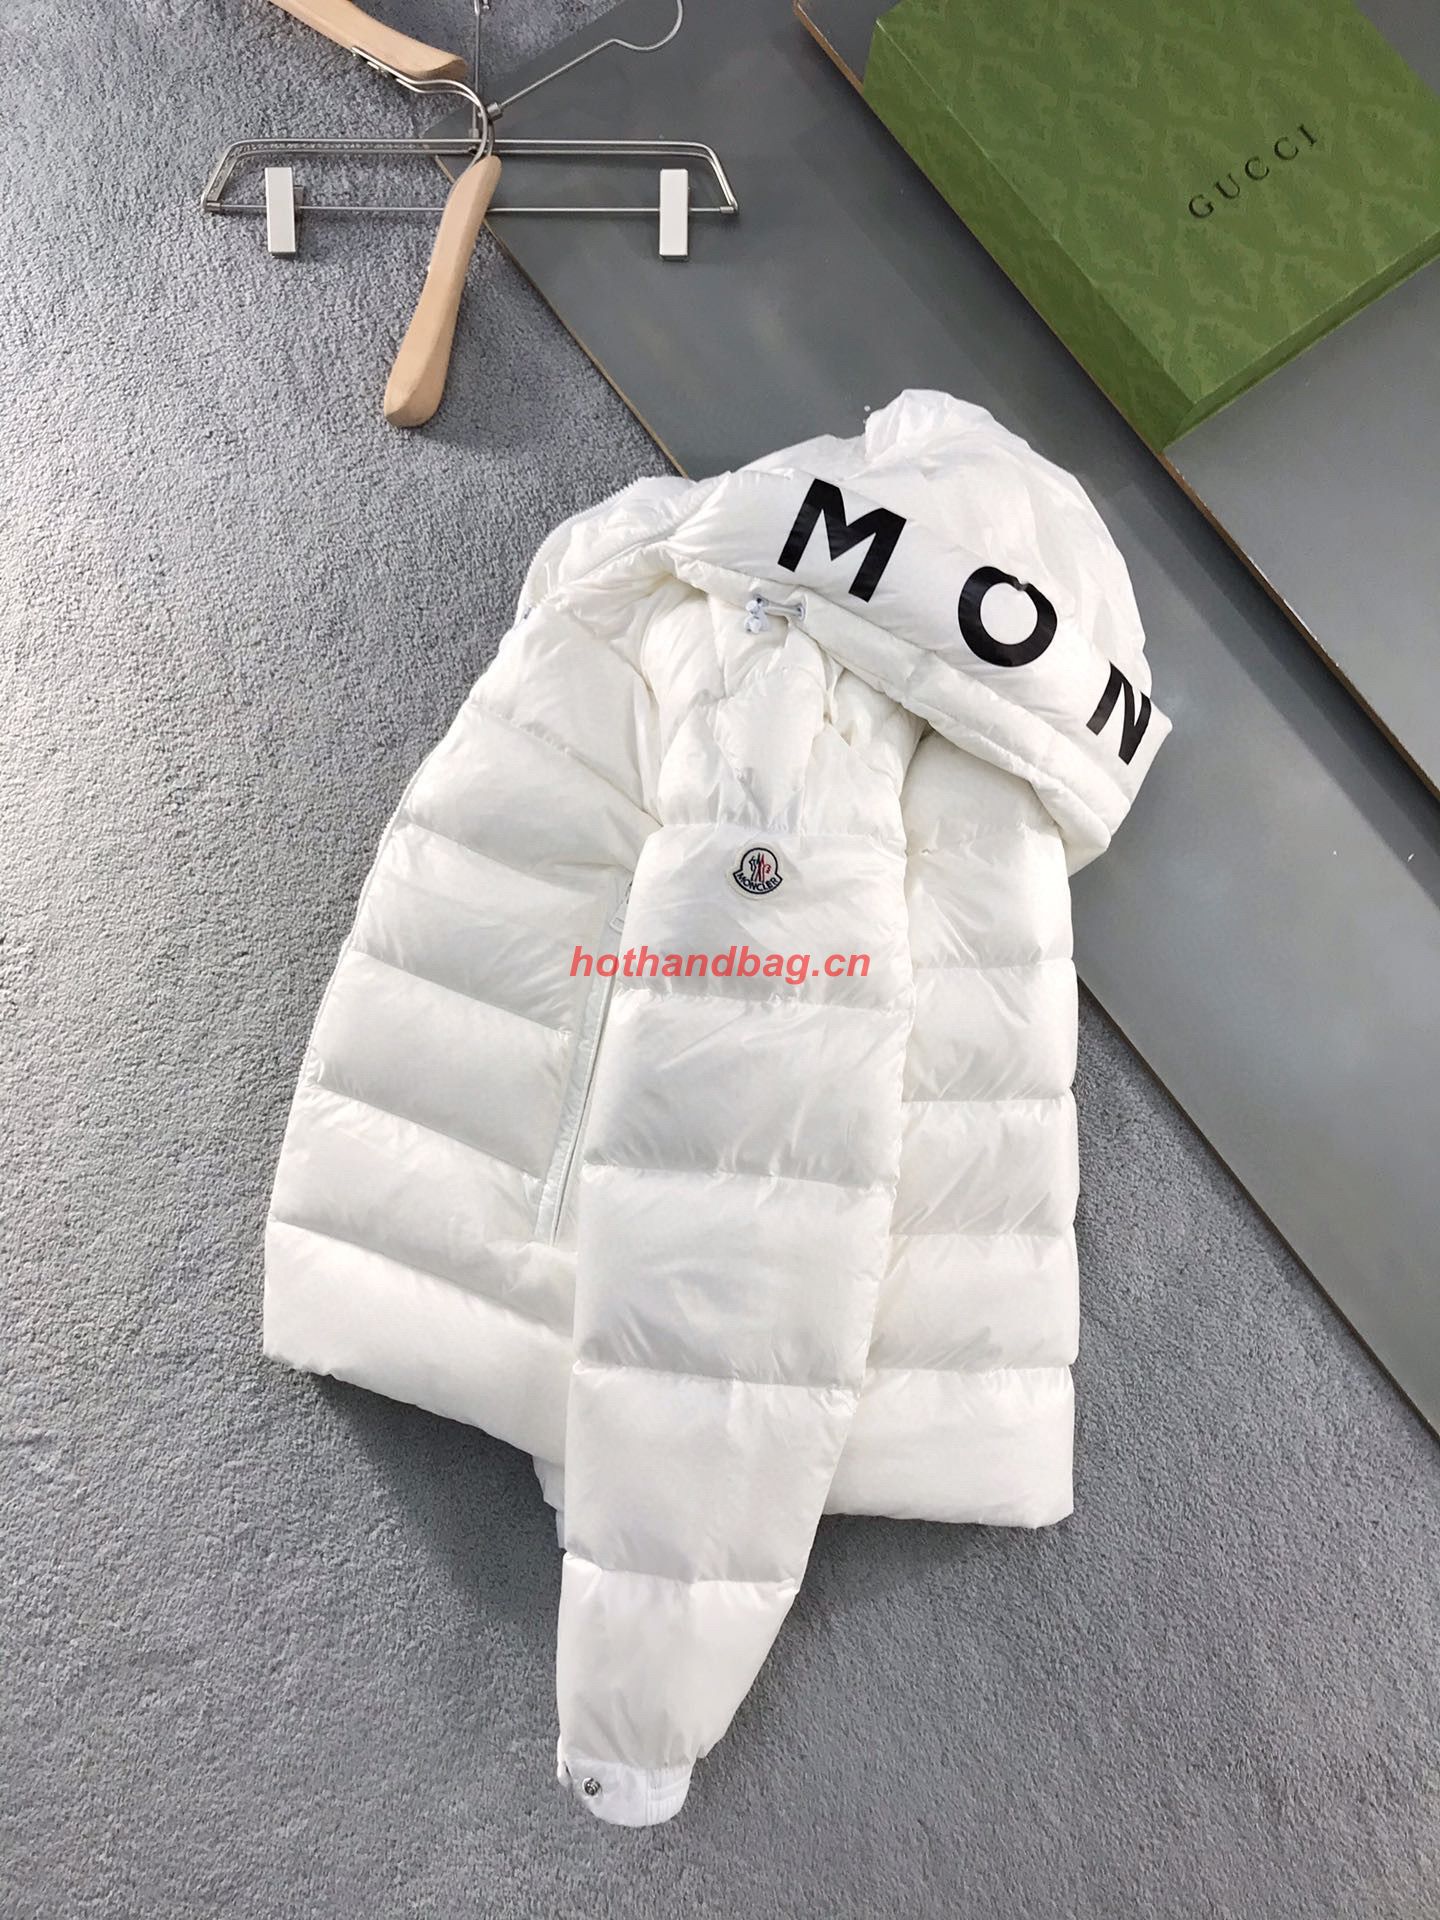 Moncler Couple Top Quality Down Coat MC302731 White